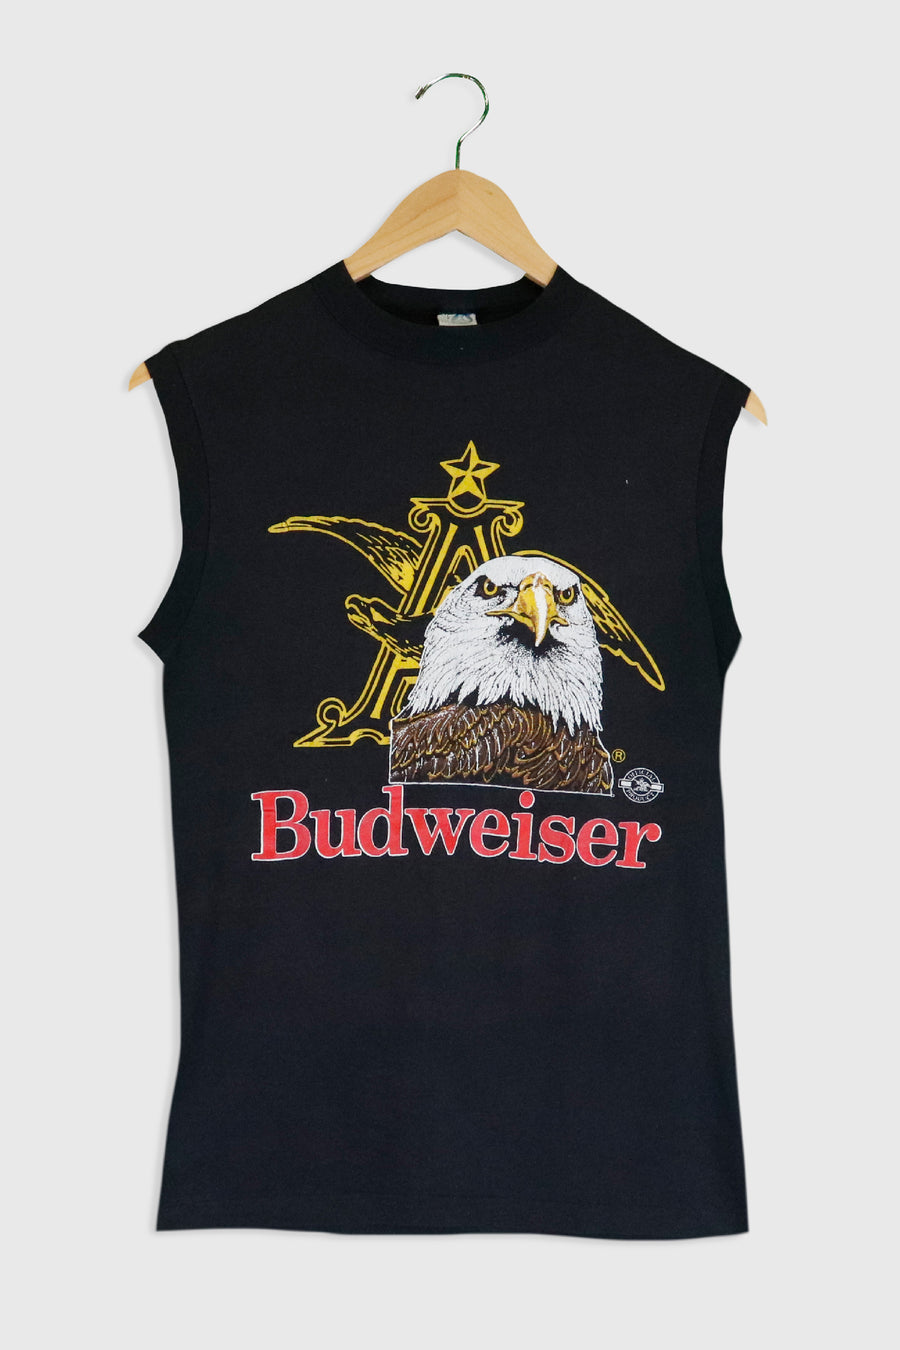 Vintage Budweiser Eagle Image Tank T Shirt Sz M